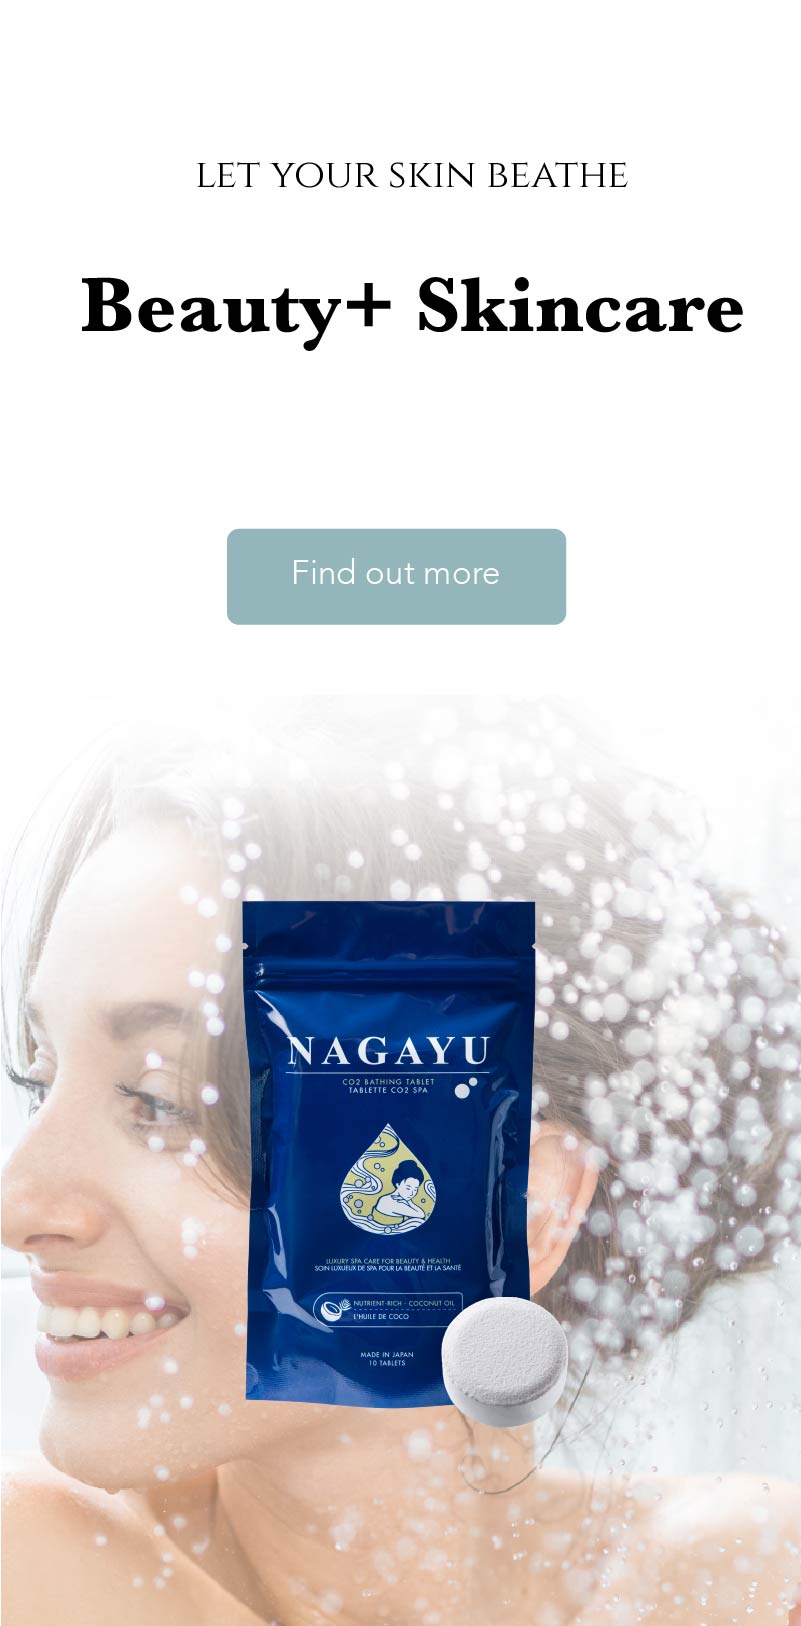 Nagayu beauty+ skincare, co2 hydrotherapy